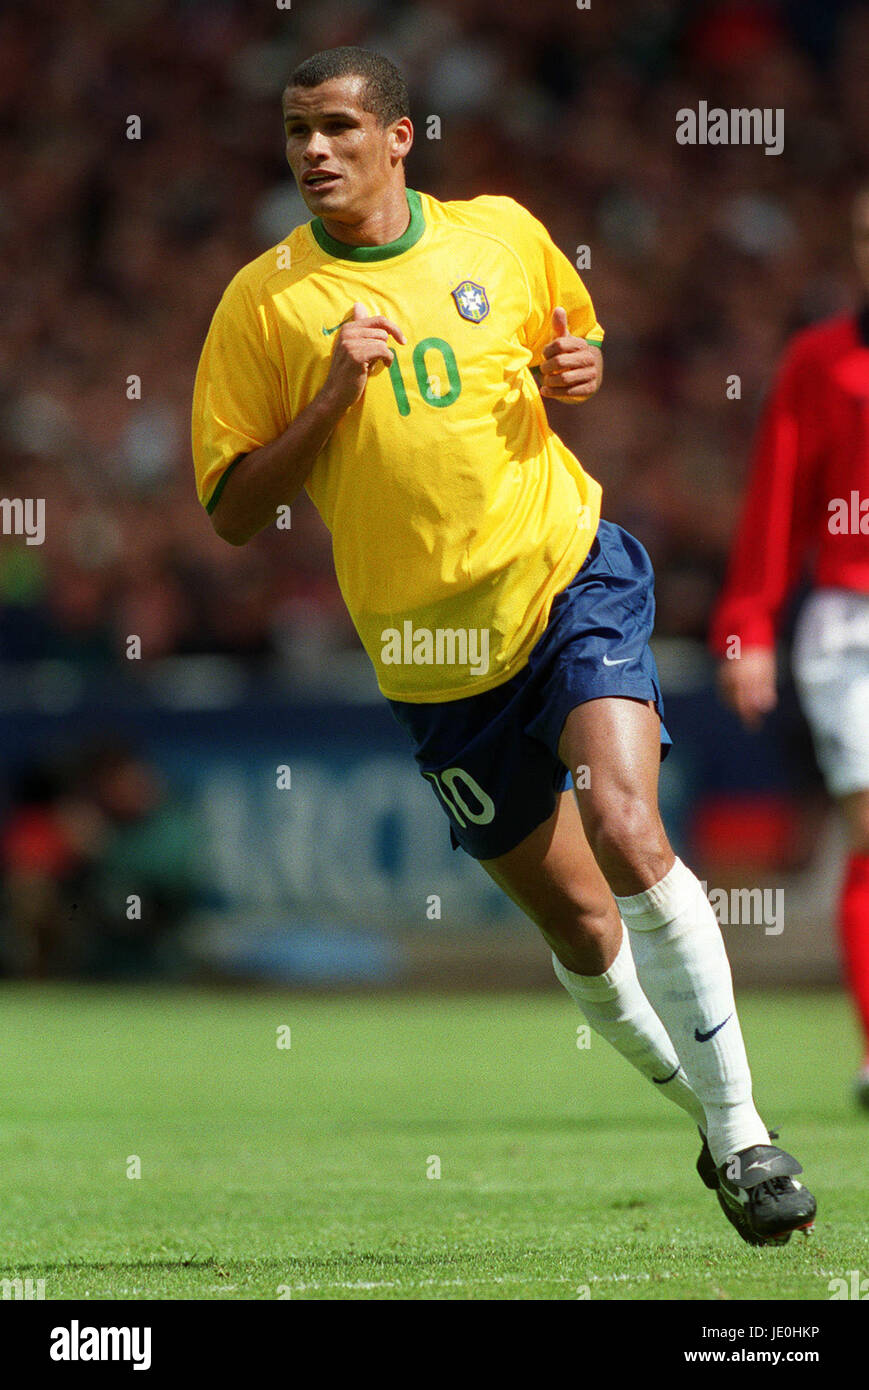 RIVALDO BRAZIL & FC BARCELONA 27 May 2000 Stock Photo - Alamy